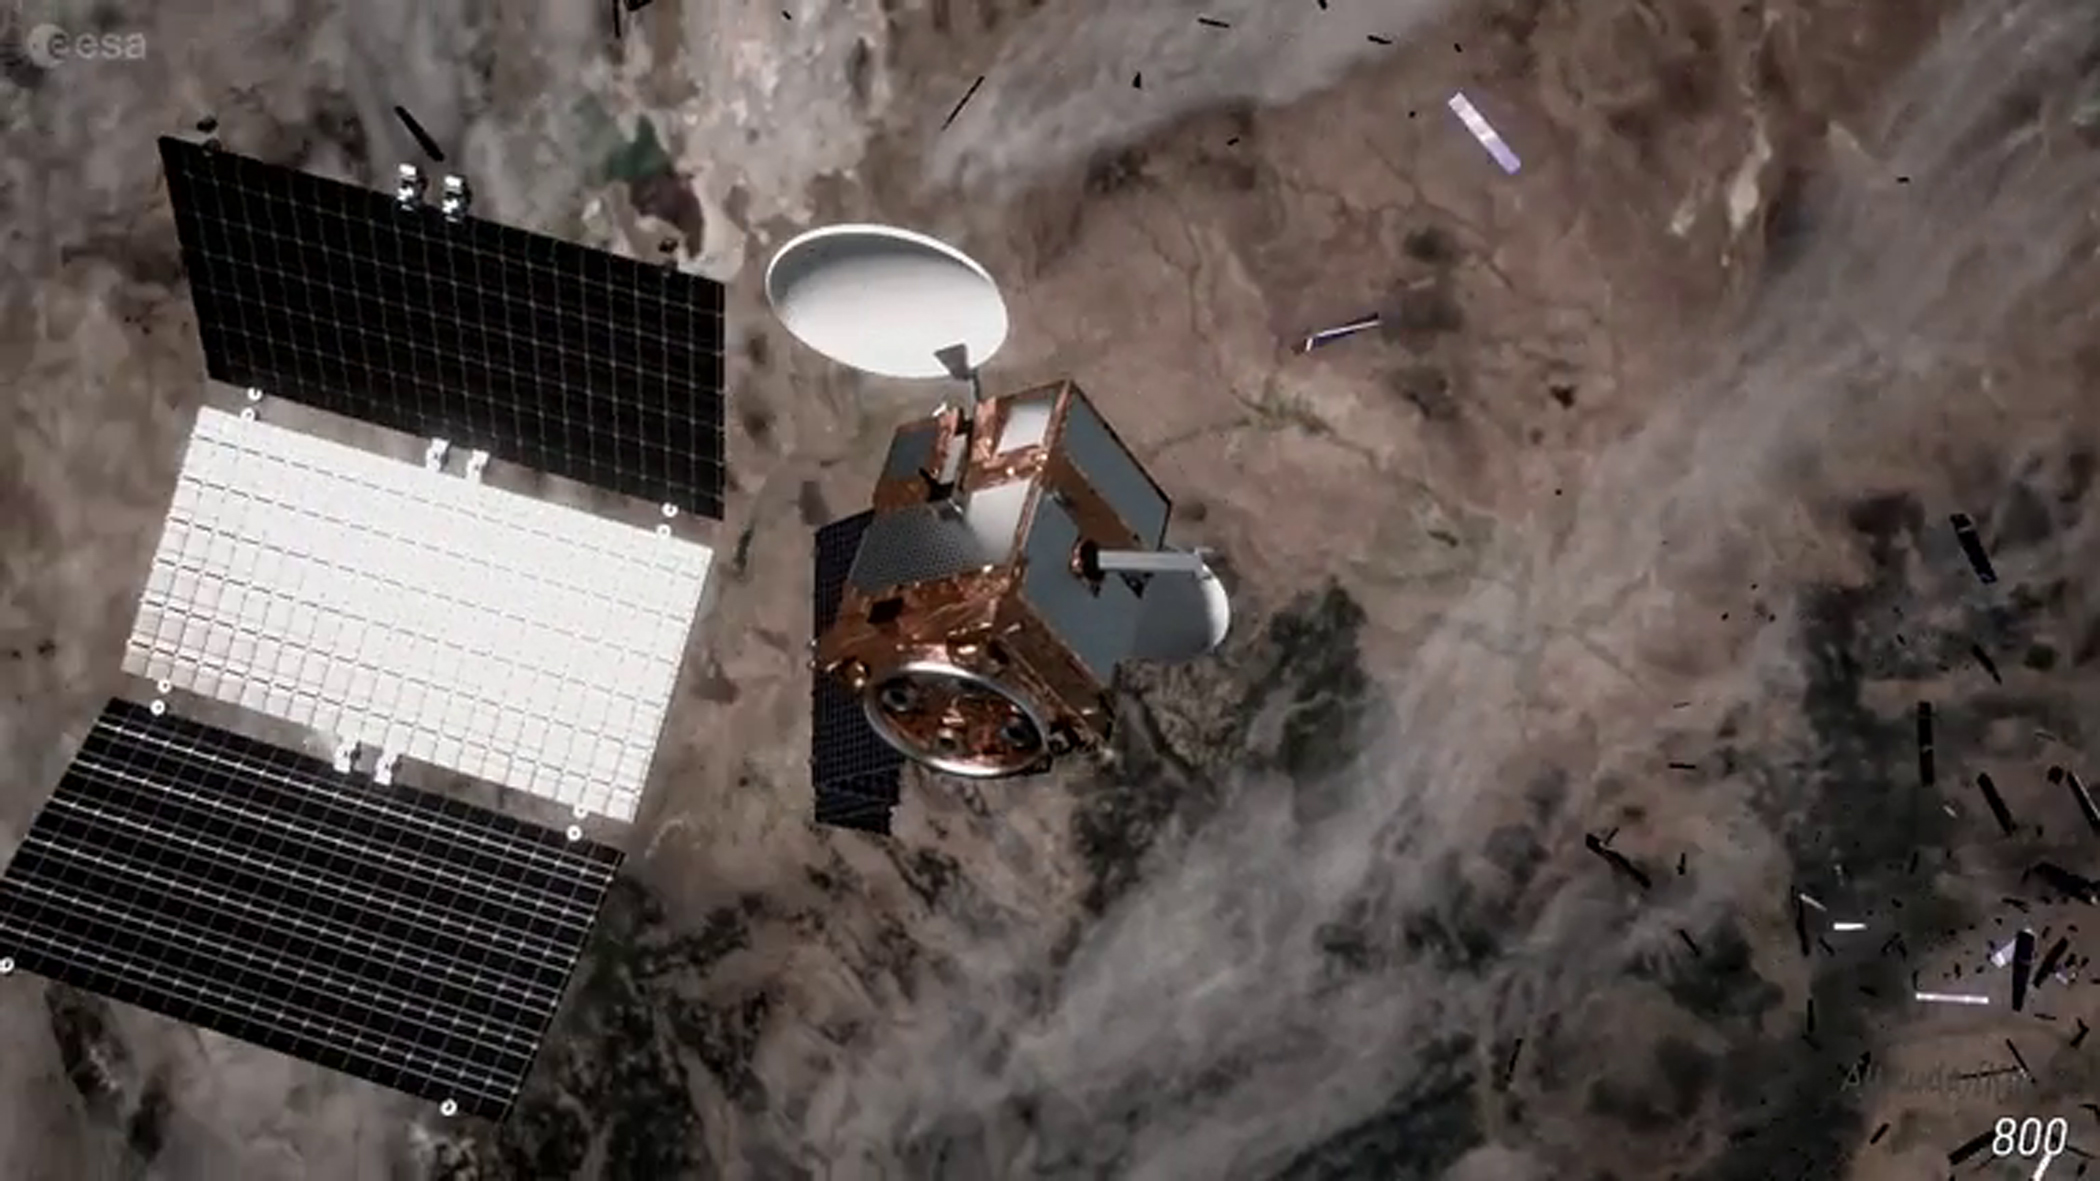 Space debris problem spurs a bold change in US government regulations